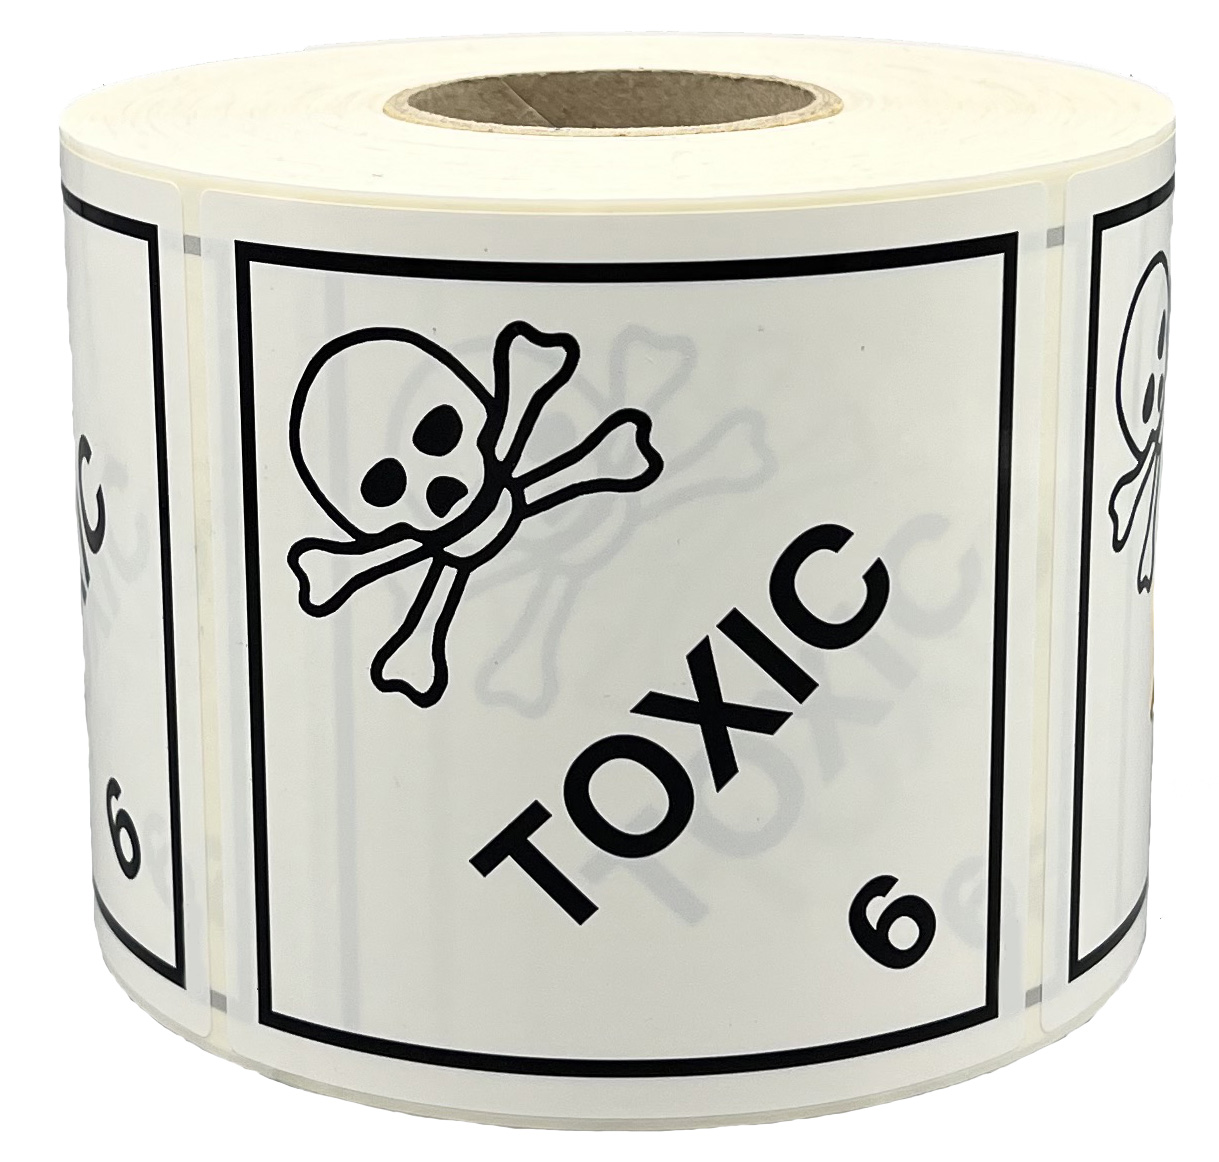 Gefahrgutetiketten Klasse 6.1 "Toxic"